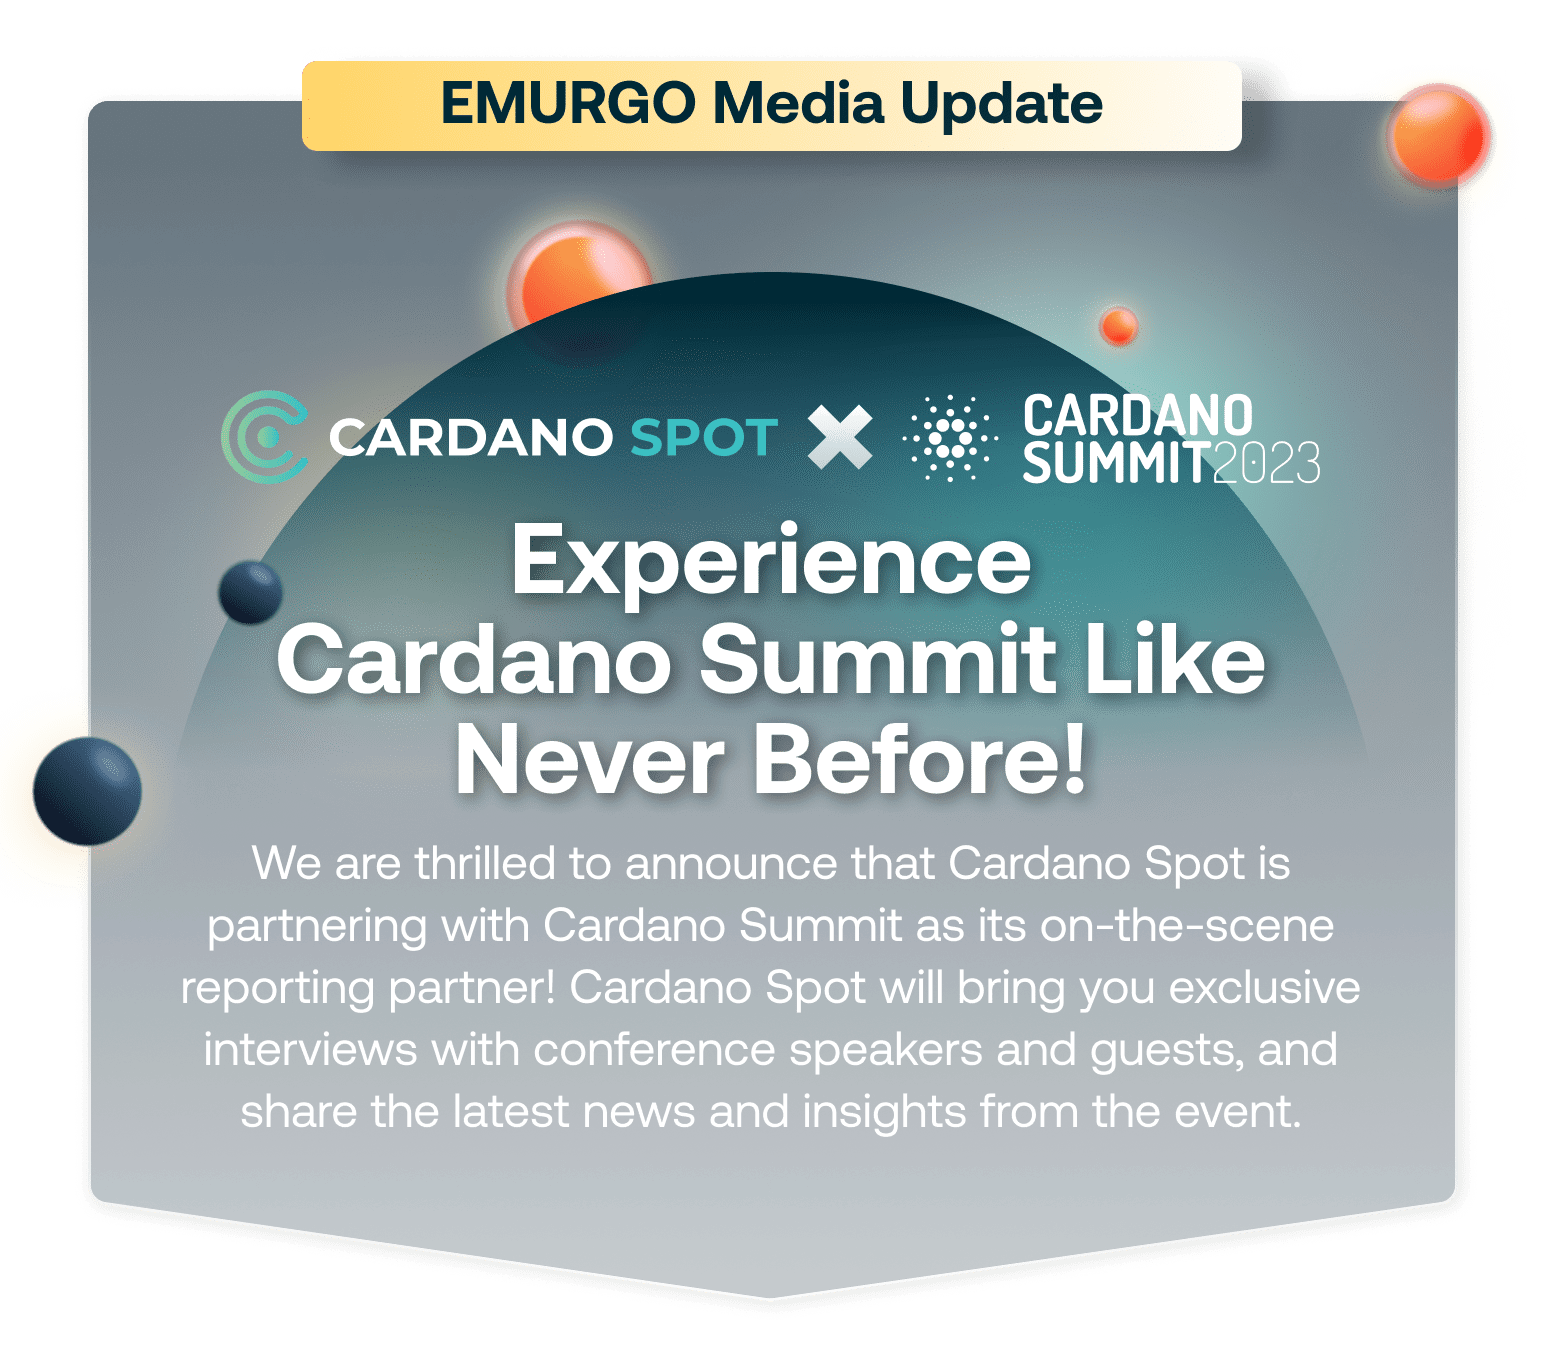 Cardano-Spot-Cardano-Summit